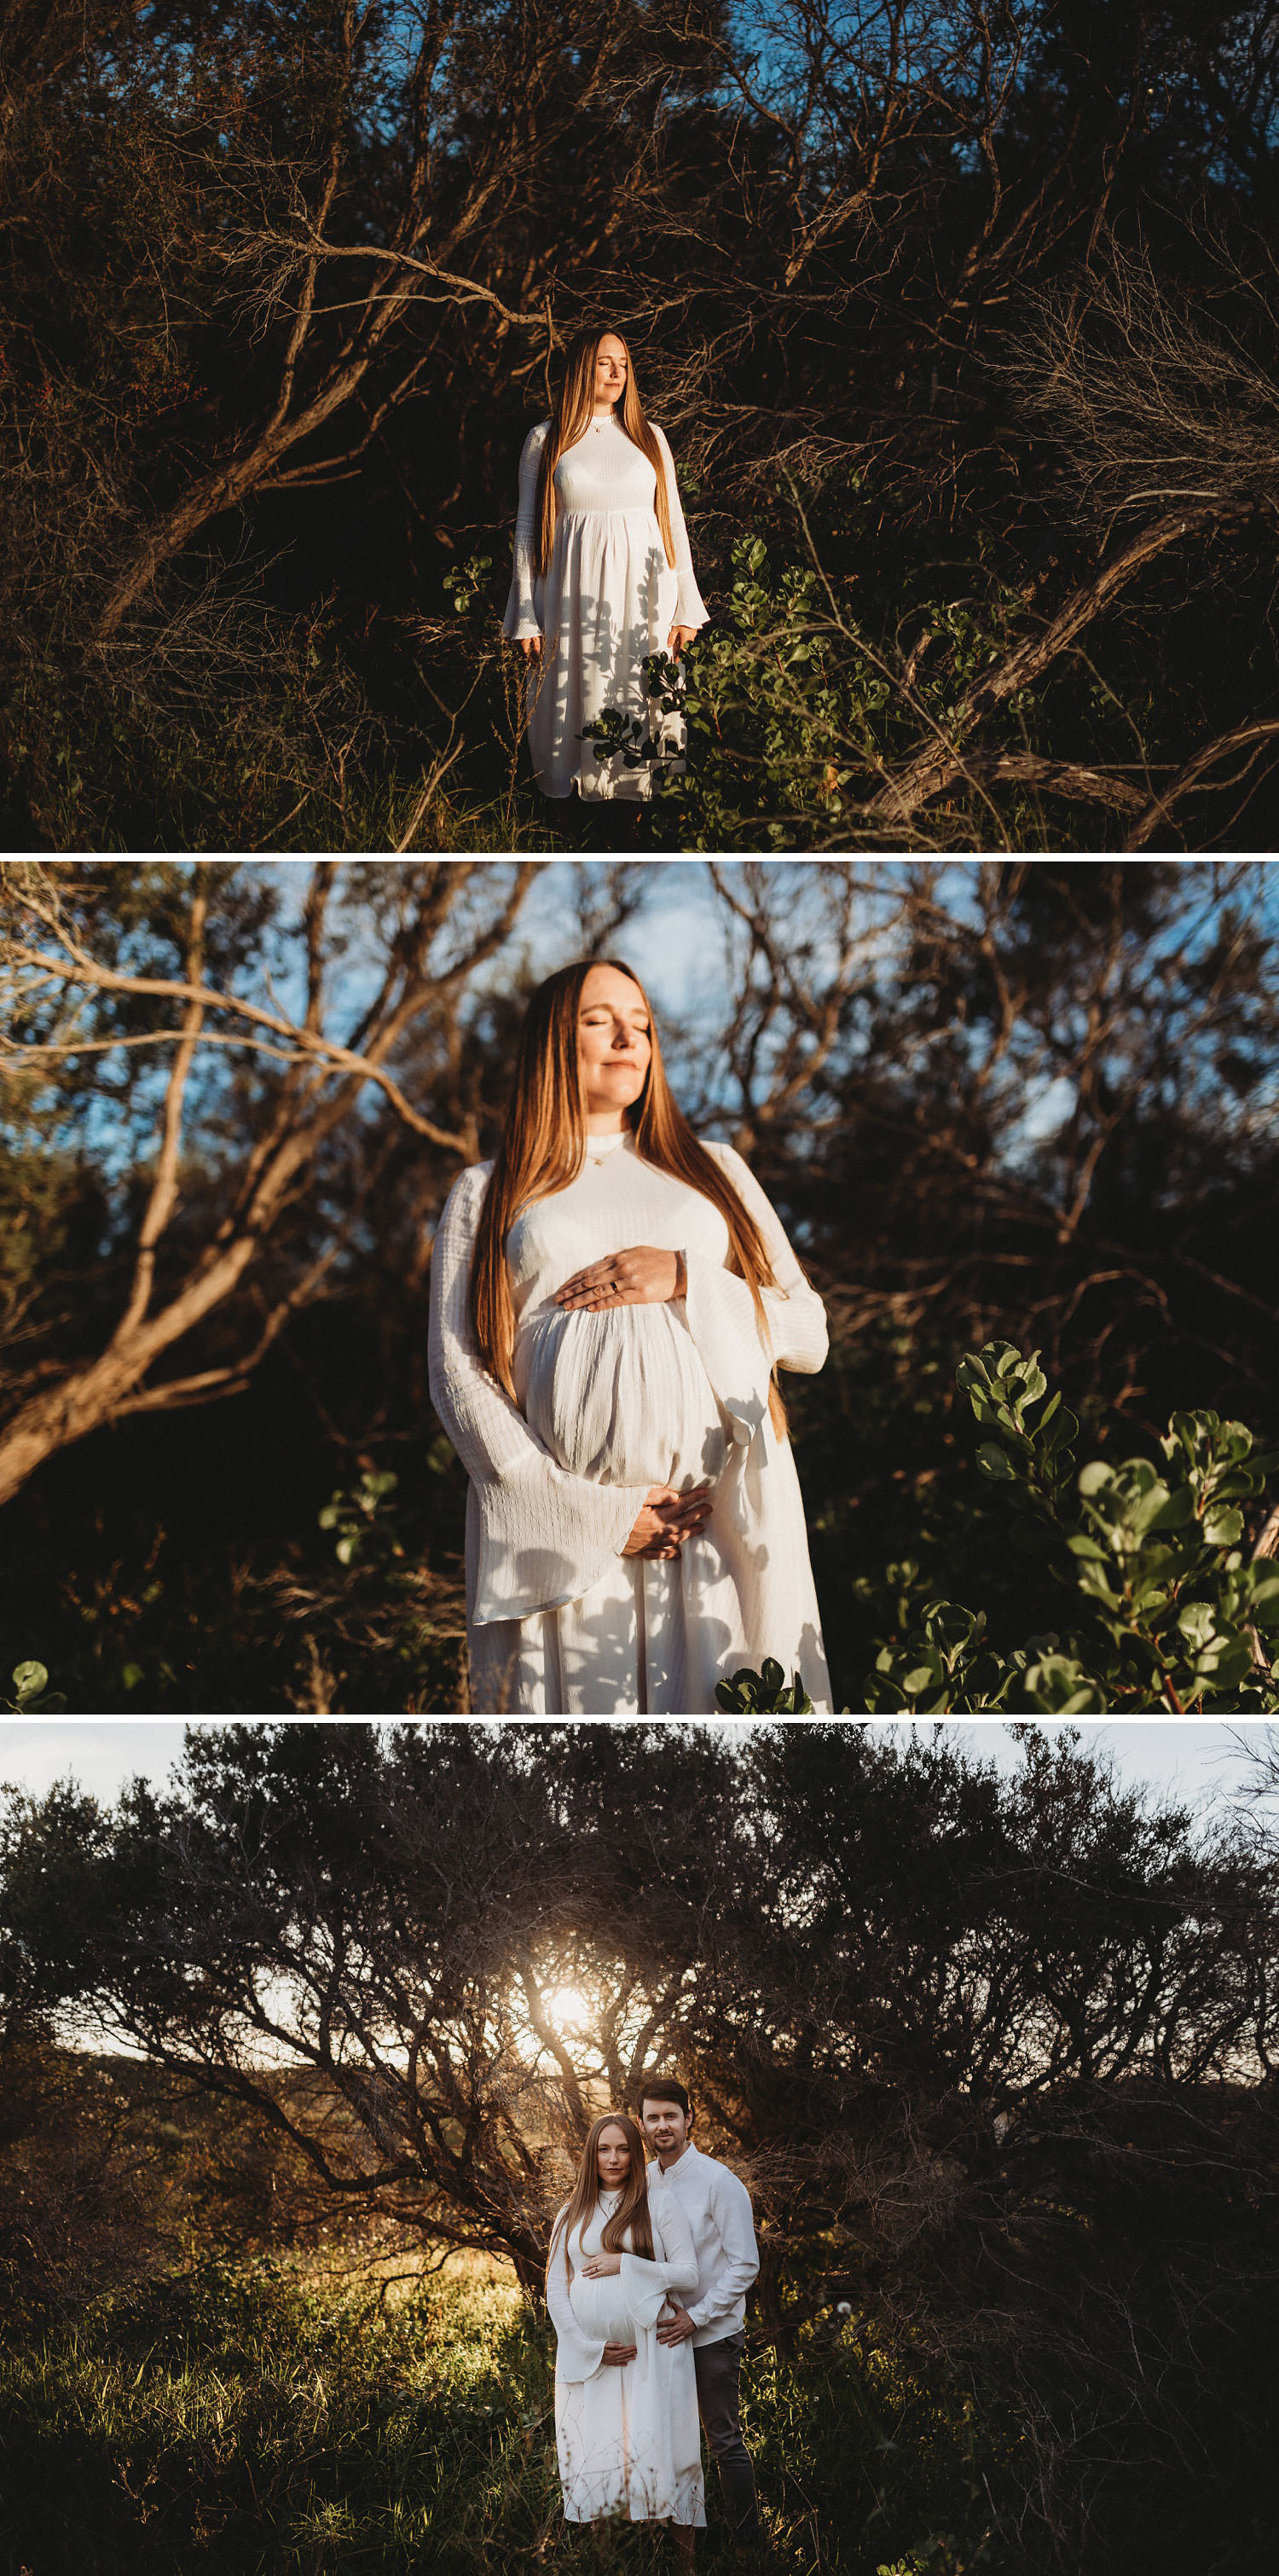 Creative-maternity-photography-sydney